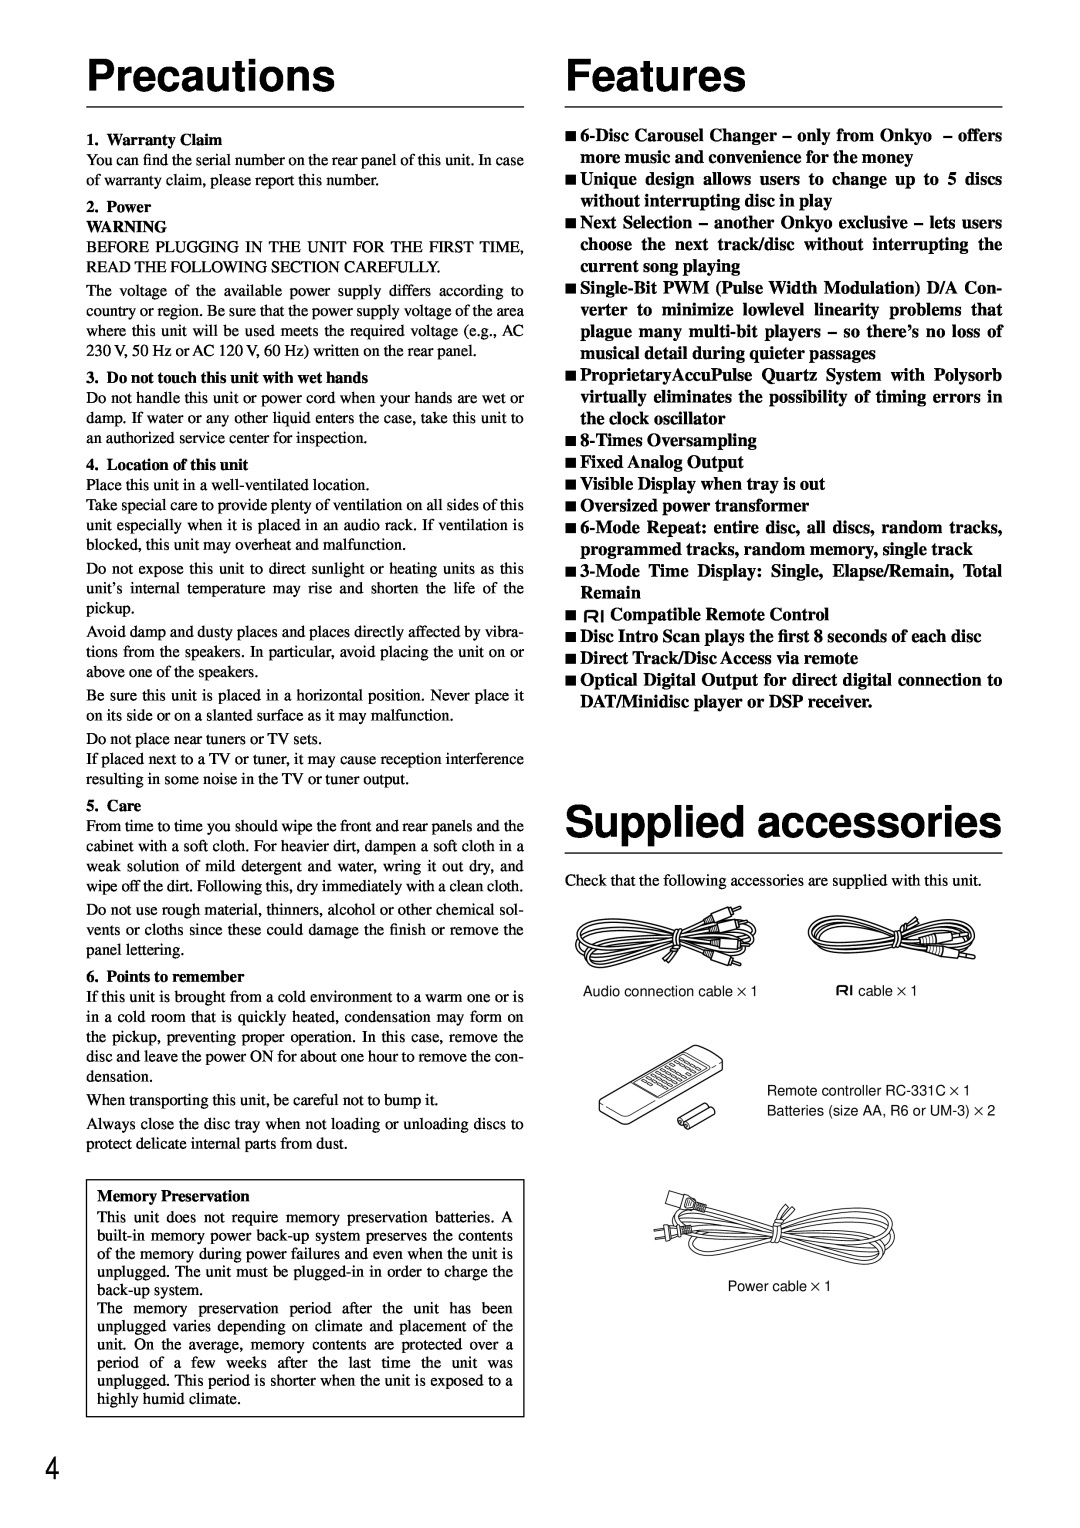 Integra CDC-3.4 appendix Features, Supplied accessories, Precautions 